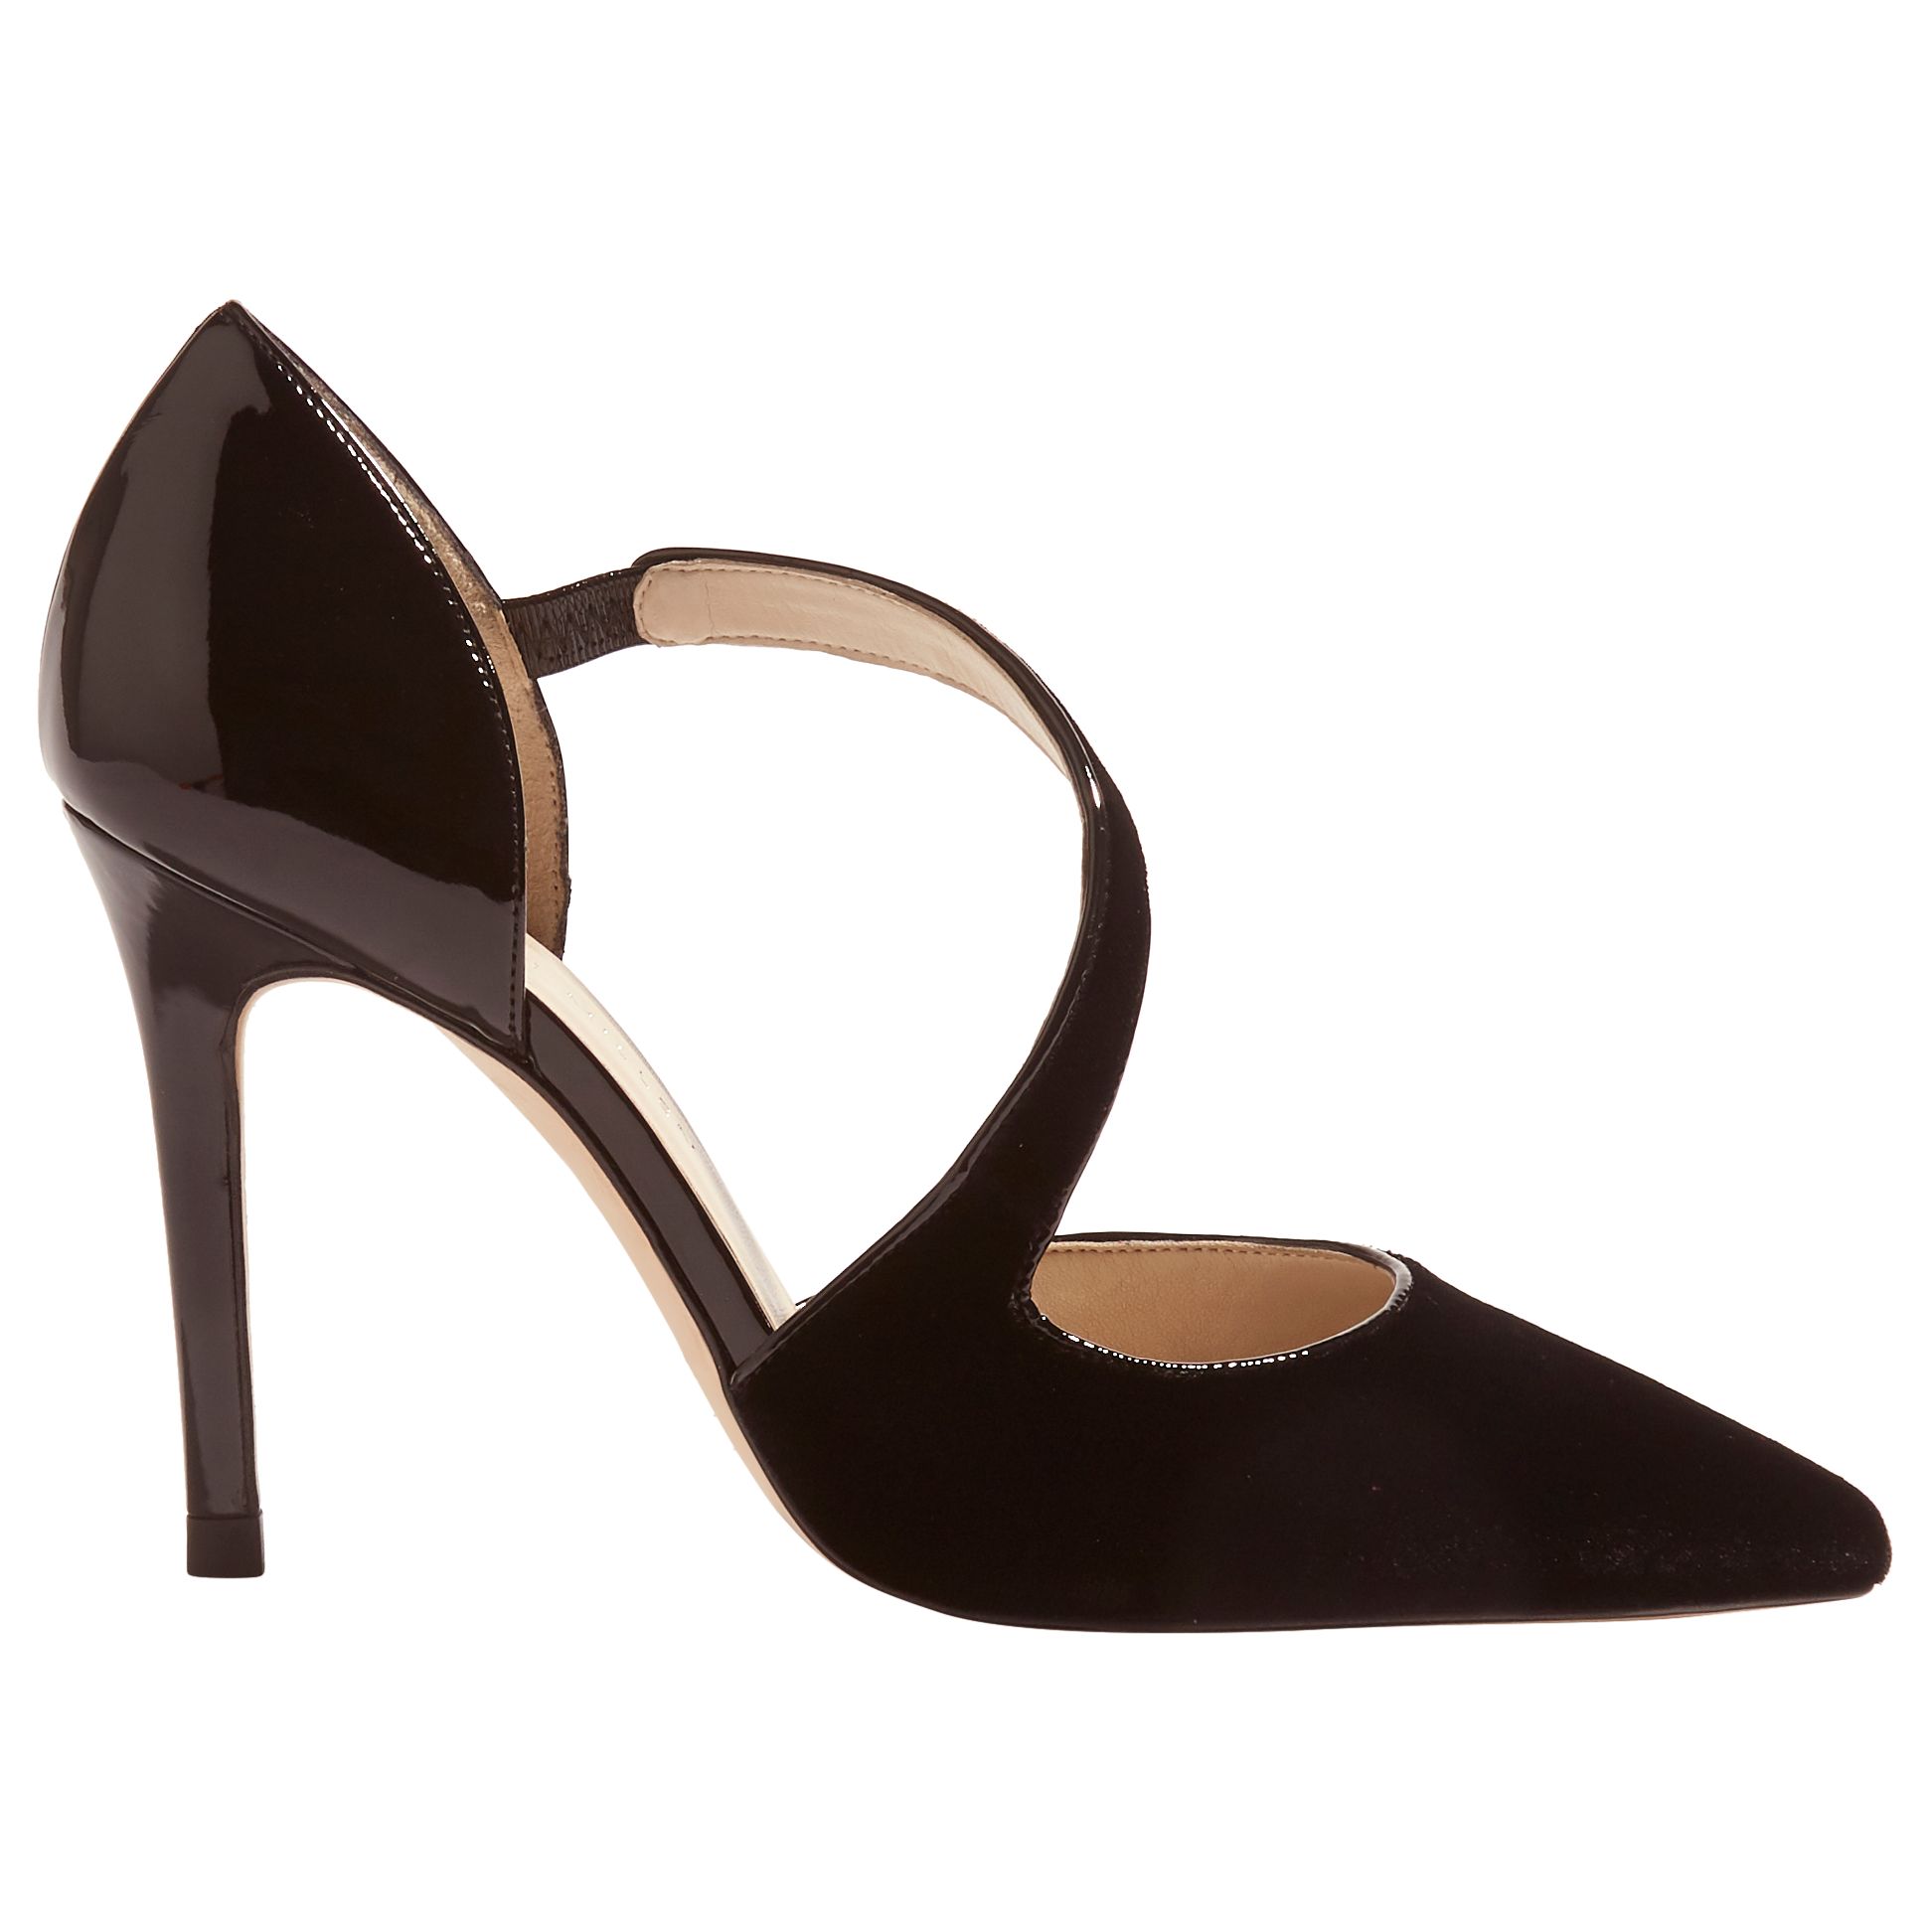 Karen Millen Asymmetric Strap Court Shoes, Black at John Lewis & Partners